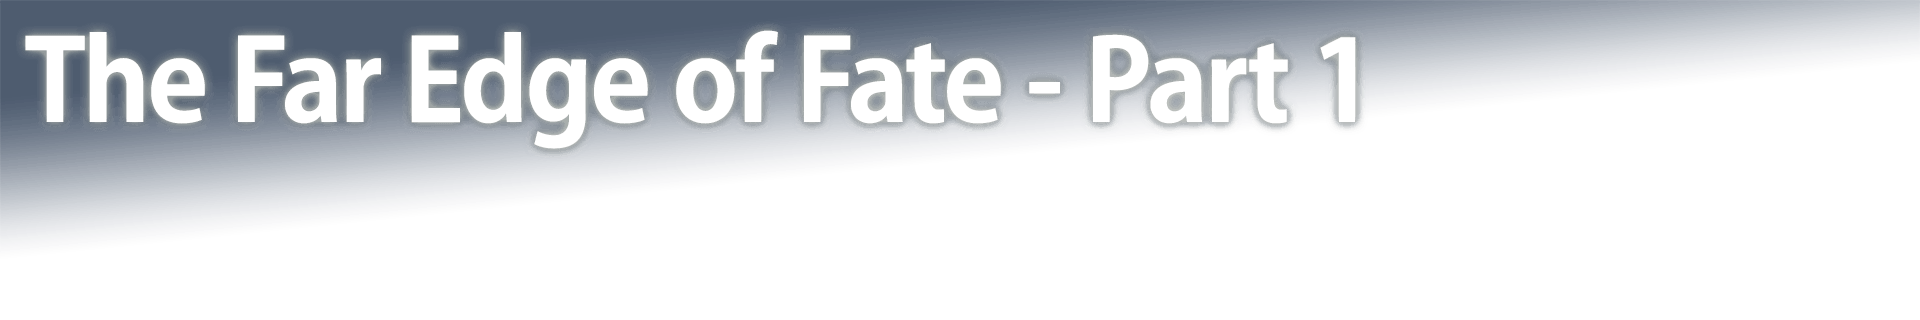 The Far Edge of Fate - Part 1